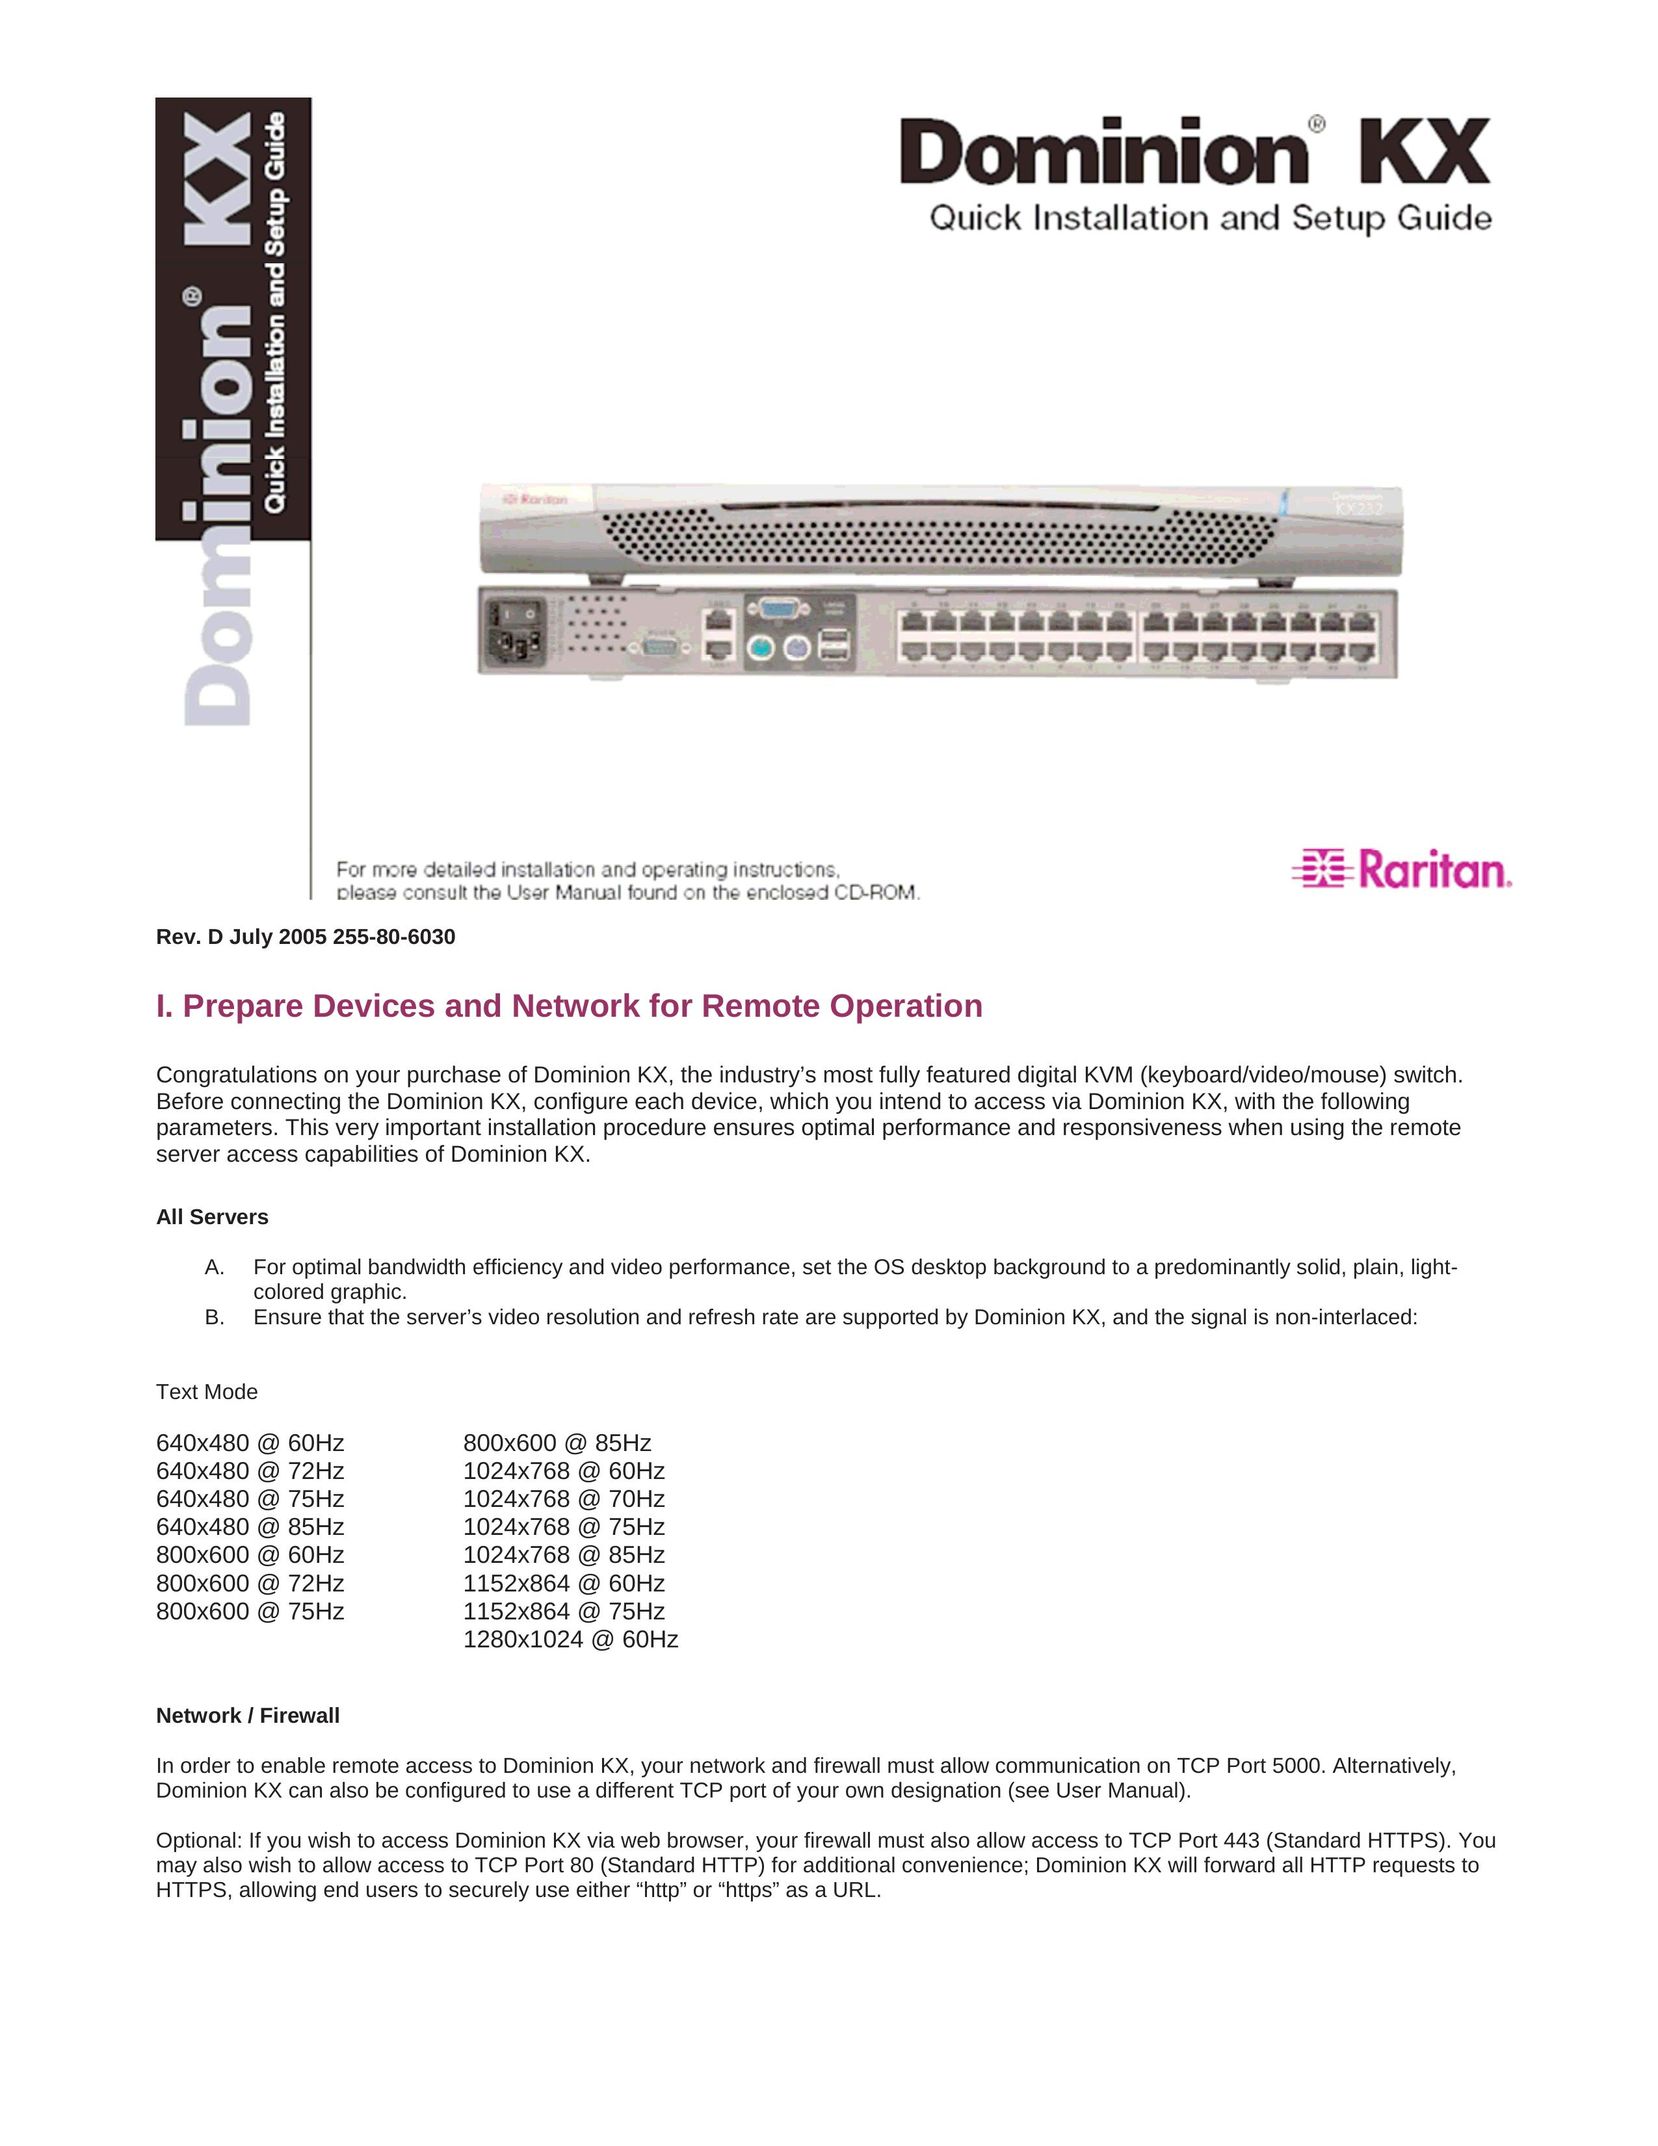 Raritan Engineering 255-80-6030 DVD VCR Combo User Manual